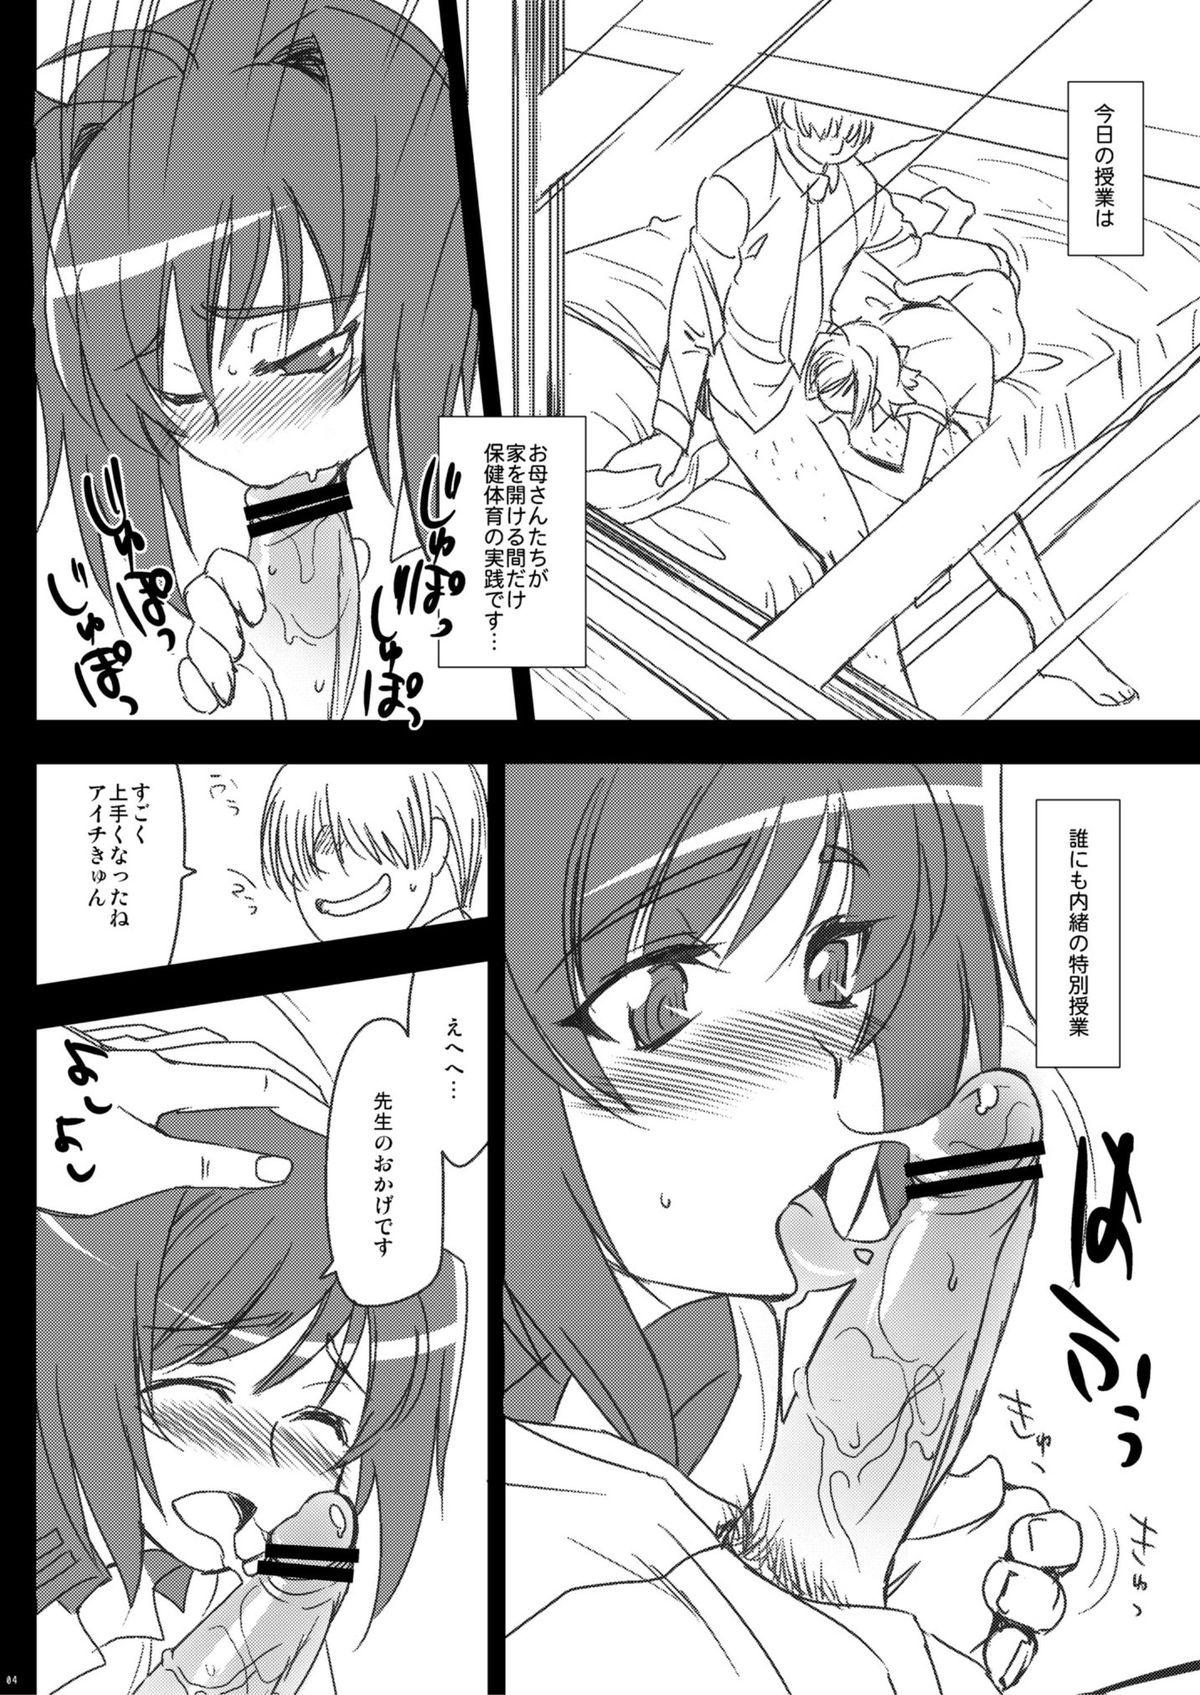 Eating Pussy Tachikawa Negoro(kitsune)Tutor ride! Attack in Aichi!(Cardfight!! Vanguard) - Cardfight vanguard Glam - Page 4